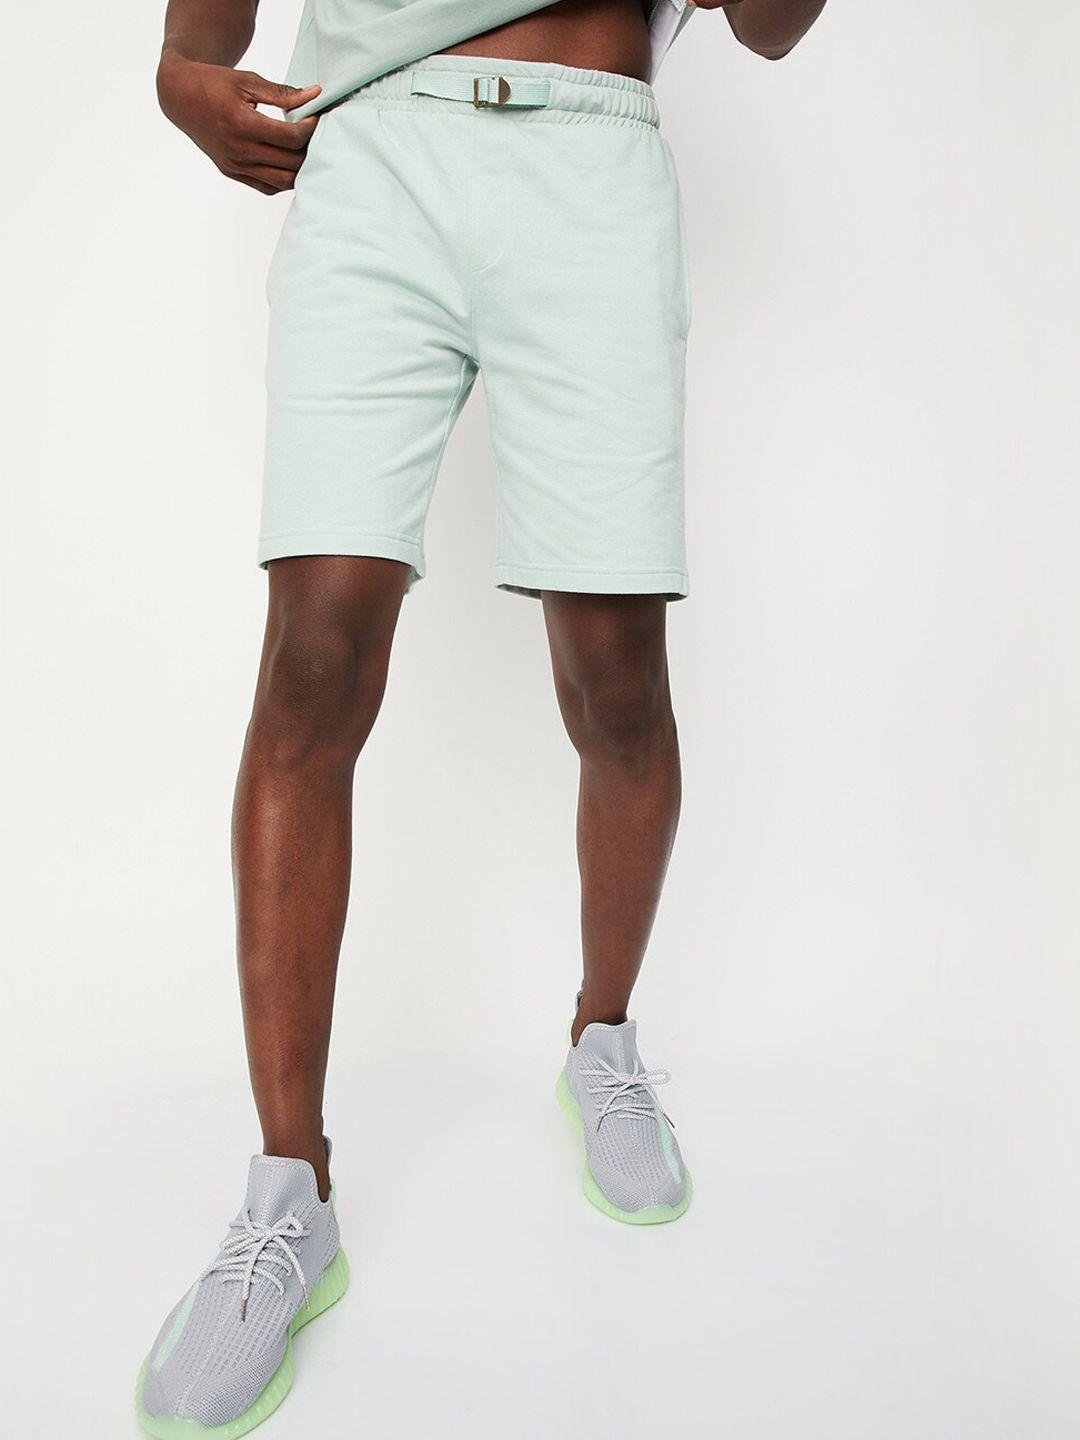 max-men-green-sports-shorts